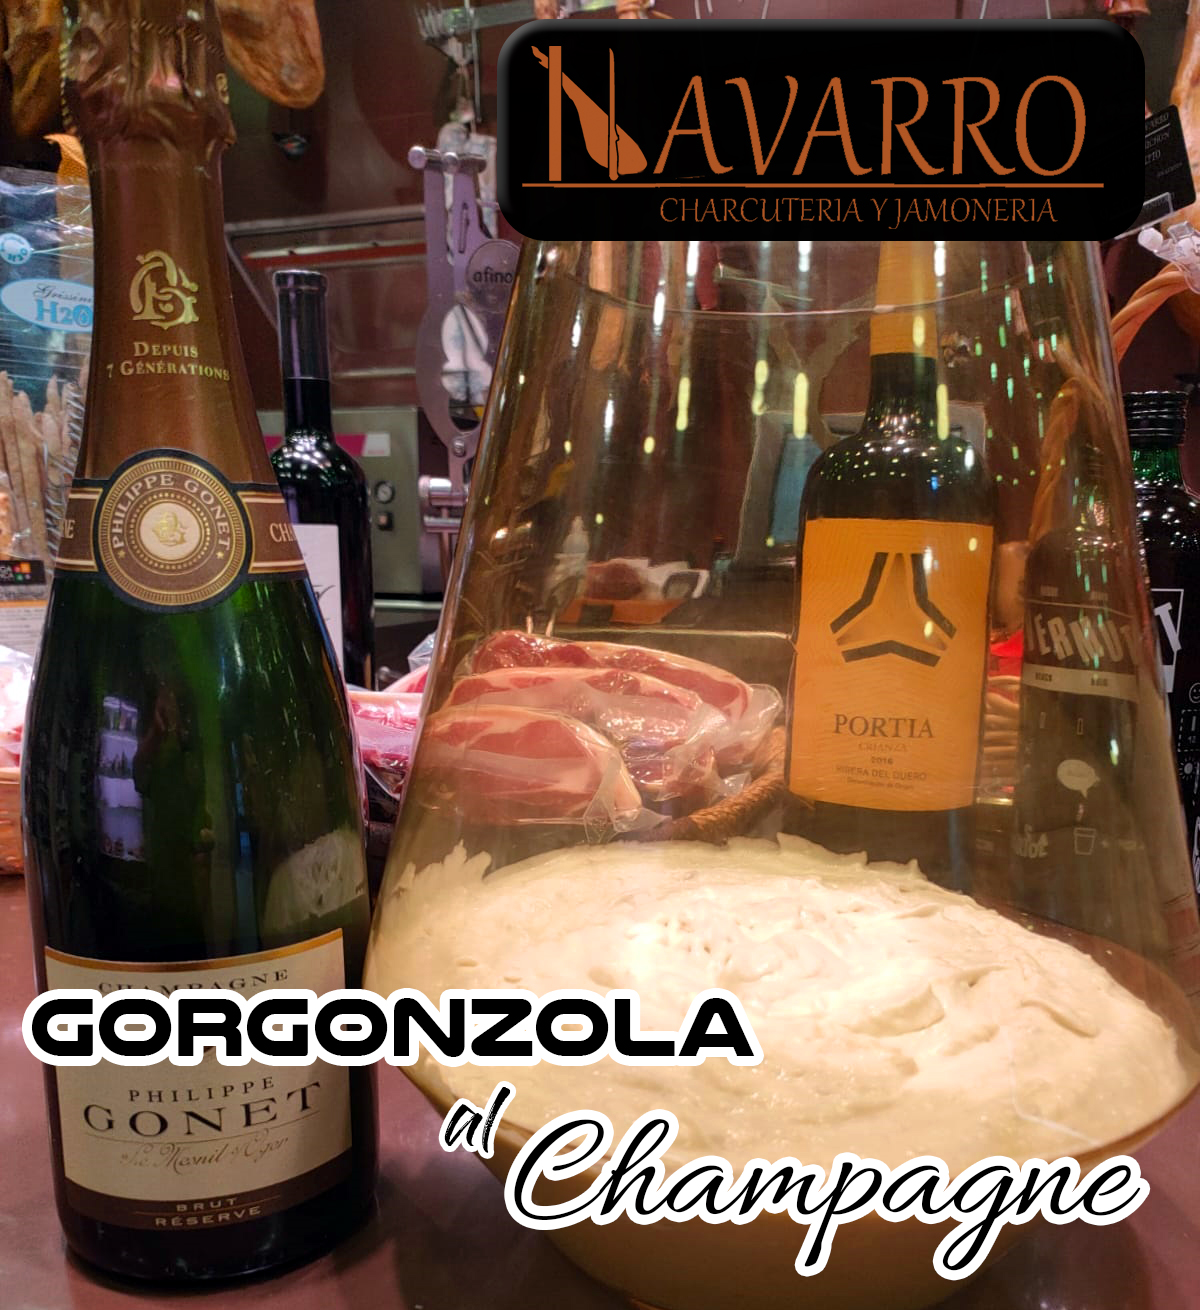 Gorgonzola al Champagne by Navarro Charcutería